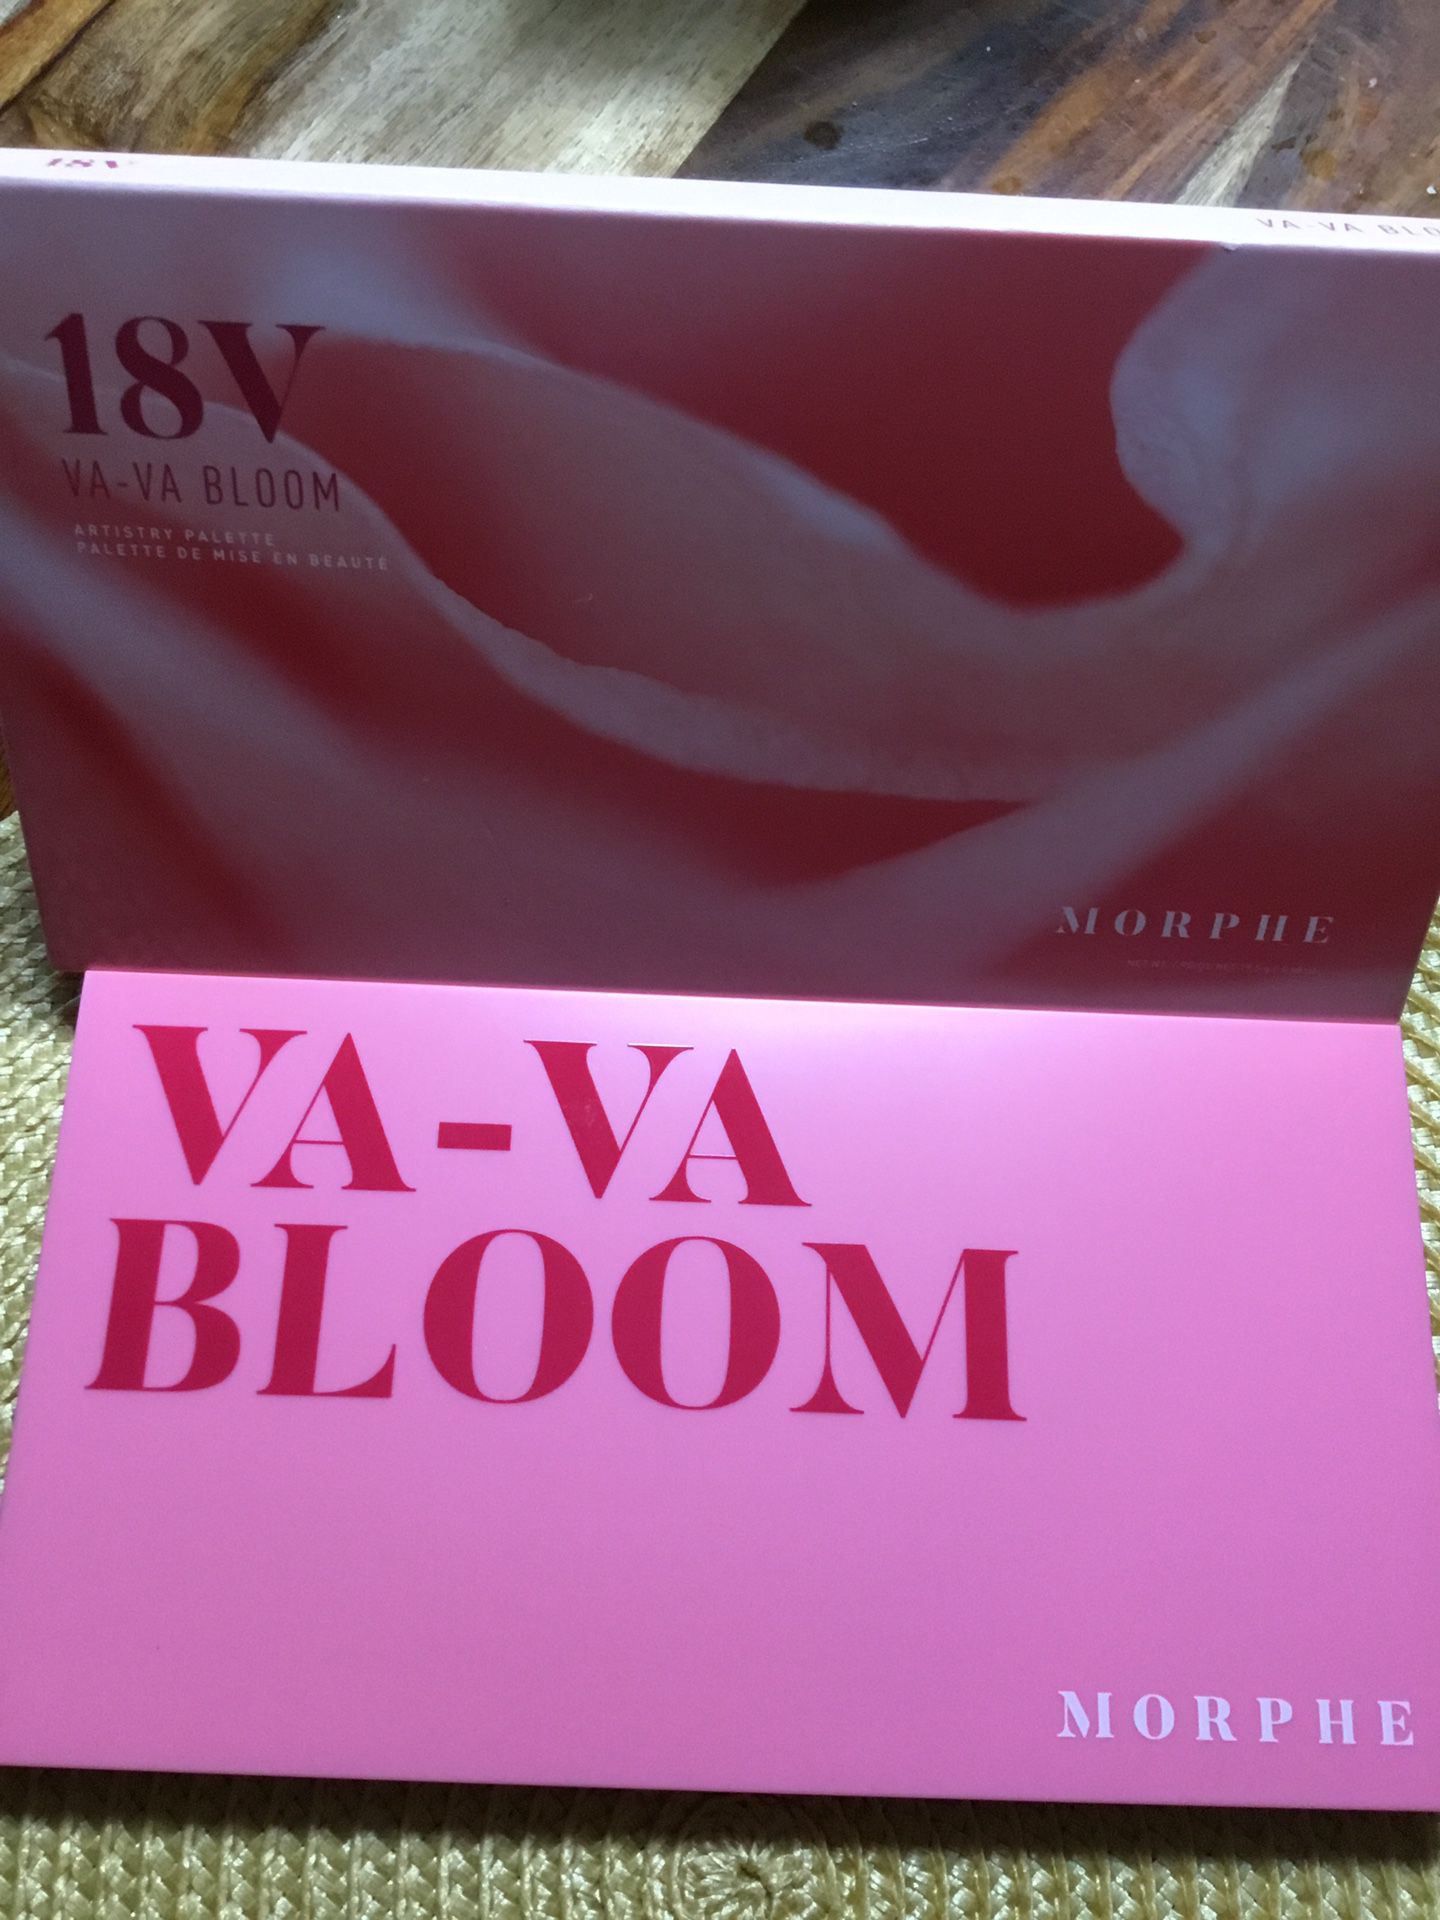 18V Va-Va Bloom Artistry Palette